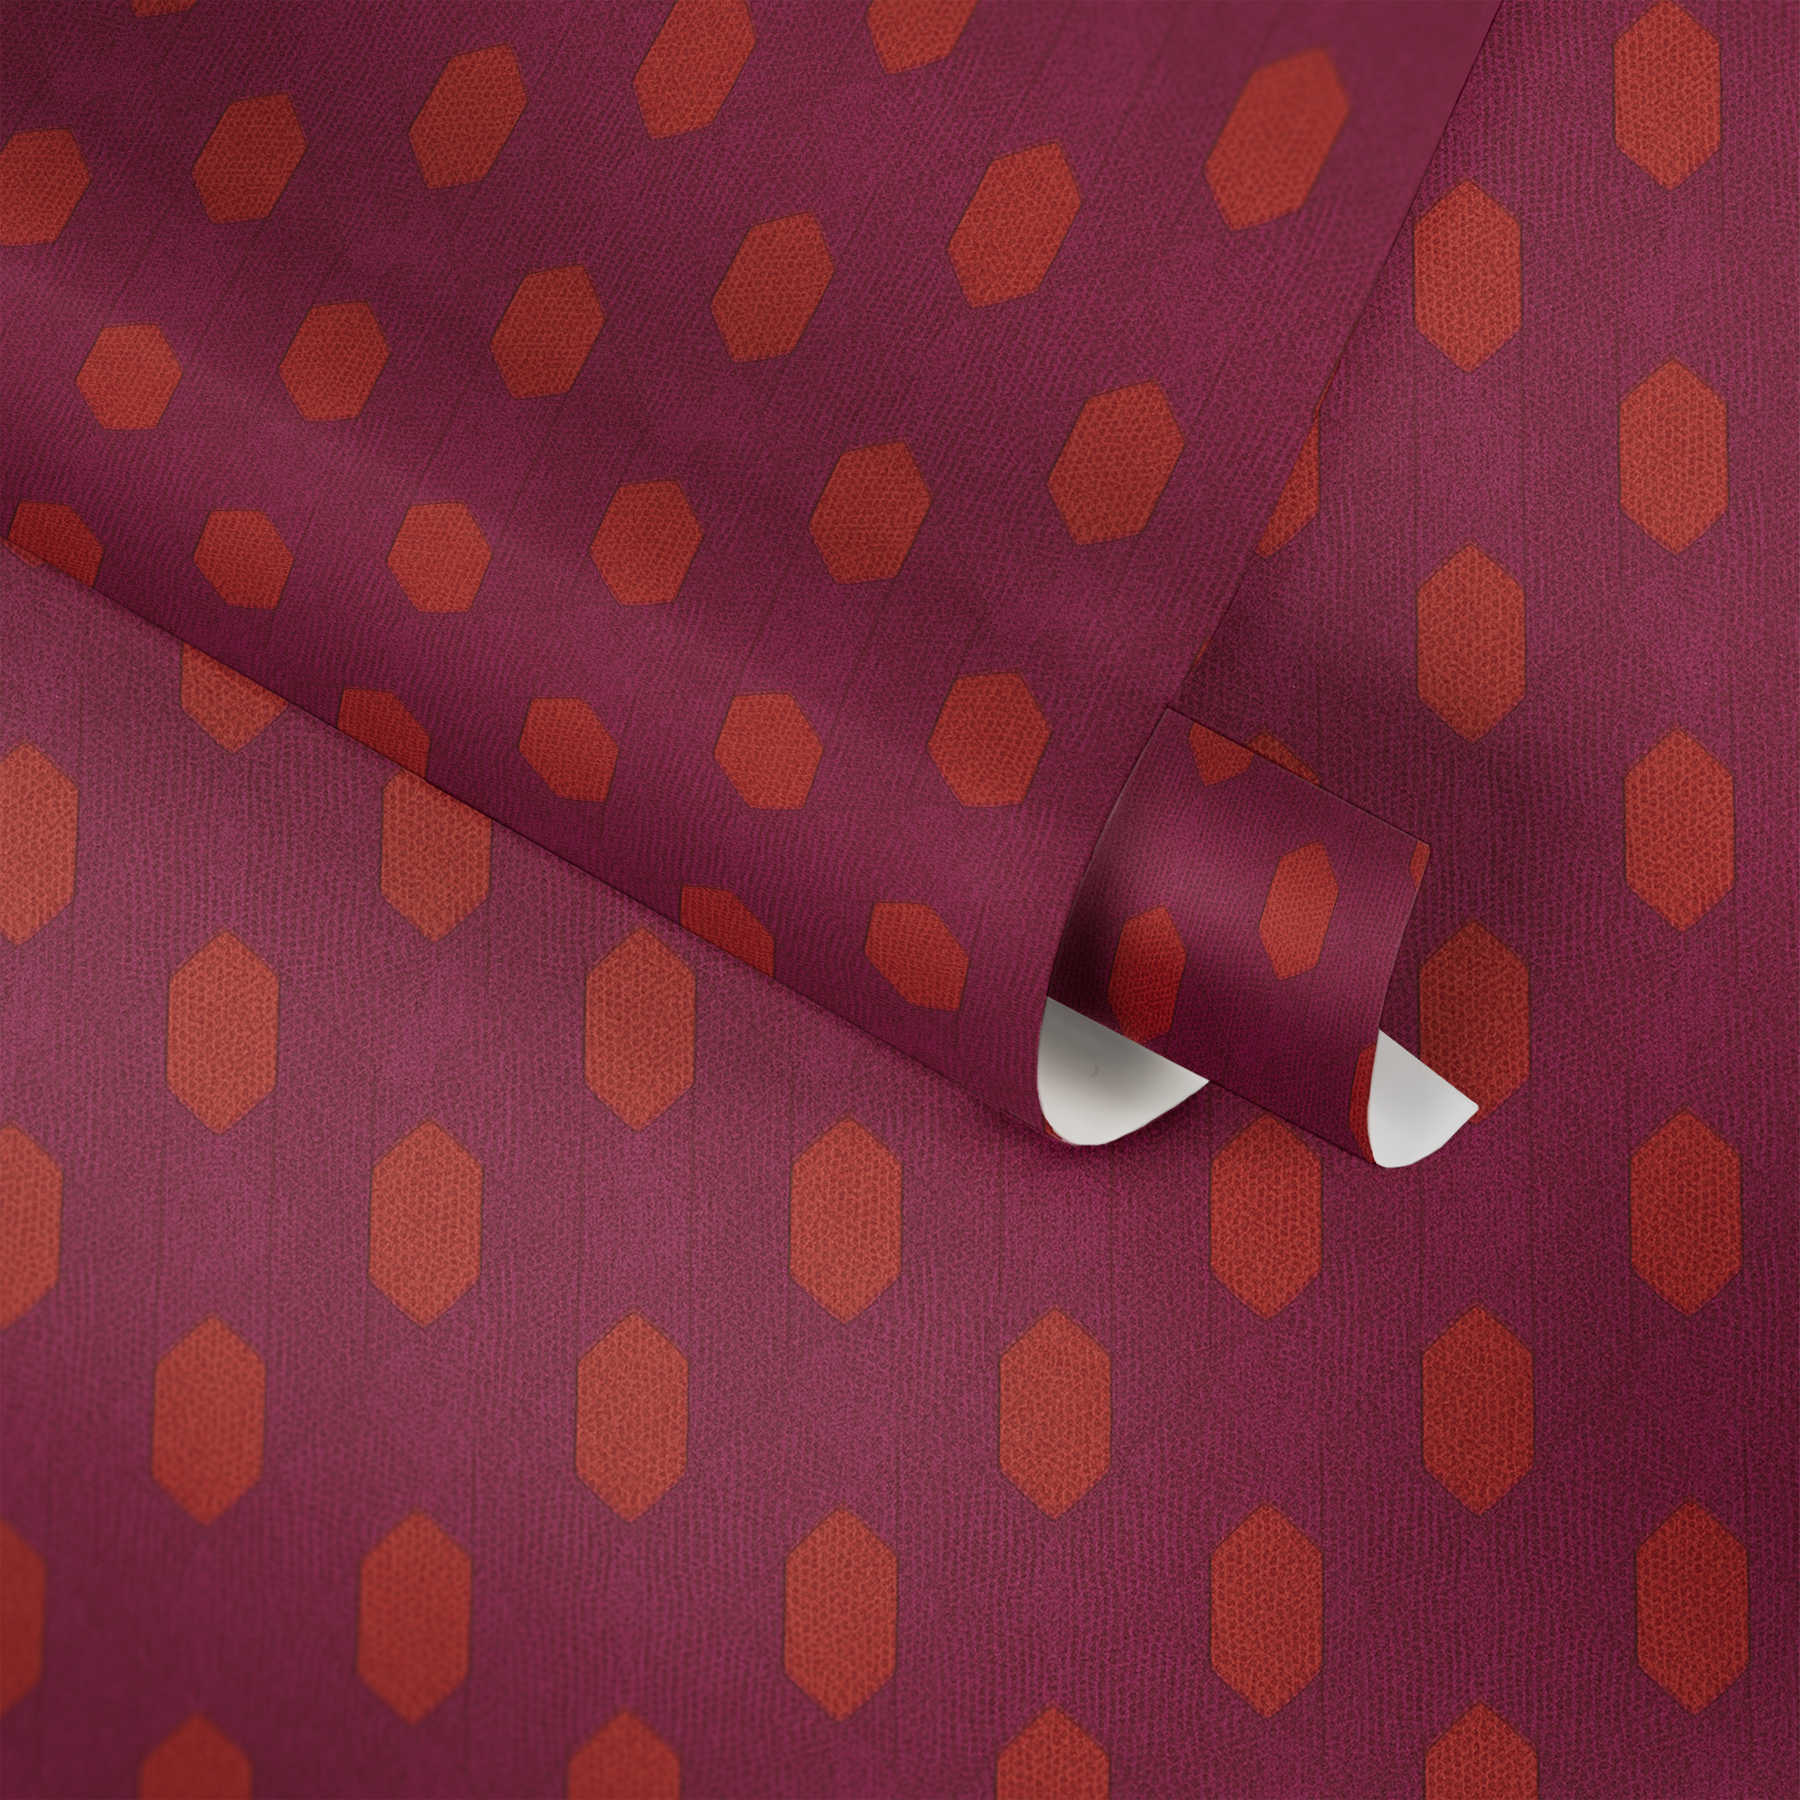             Magenta wallpaper with geometric pattern - purple, red, orange
        